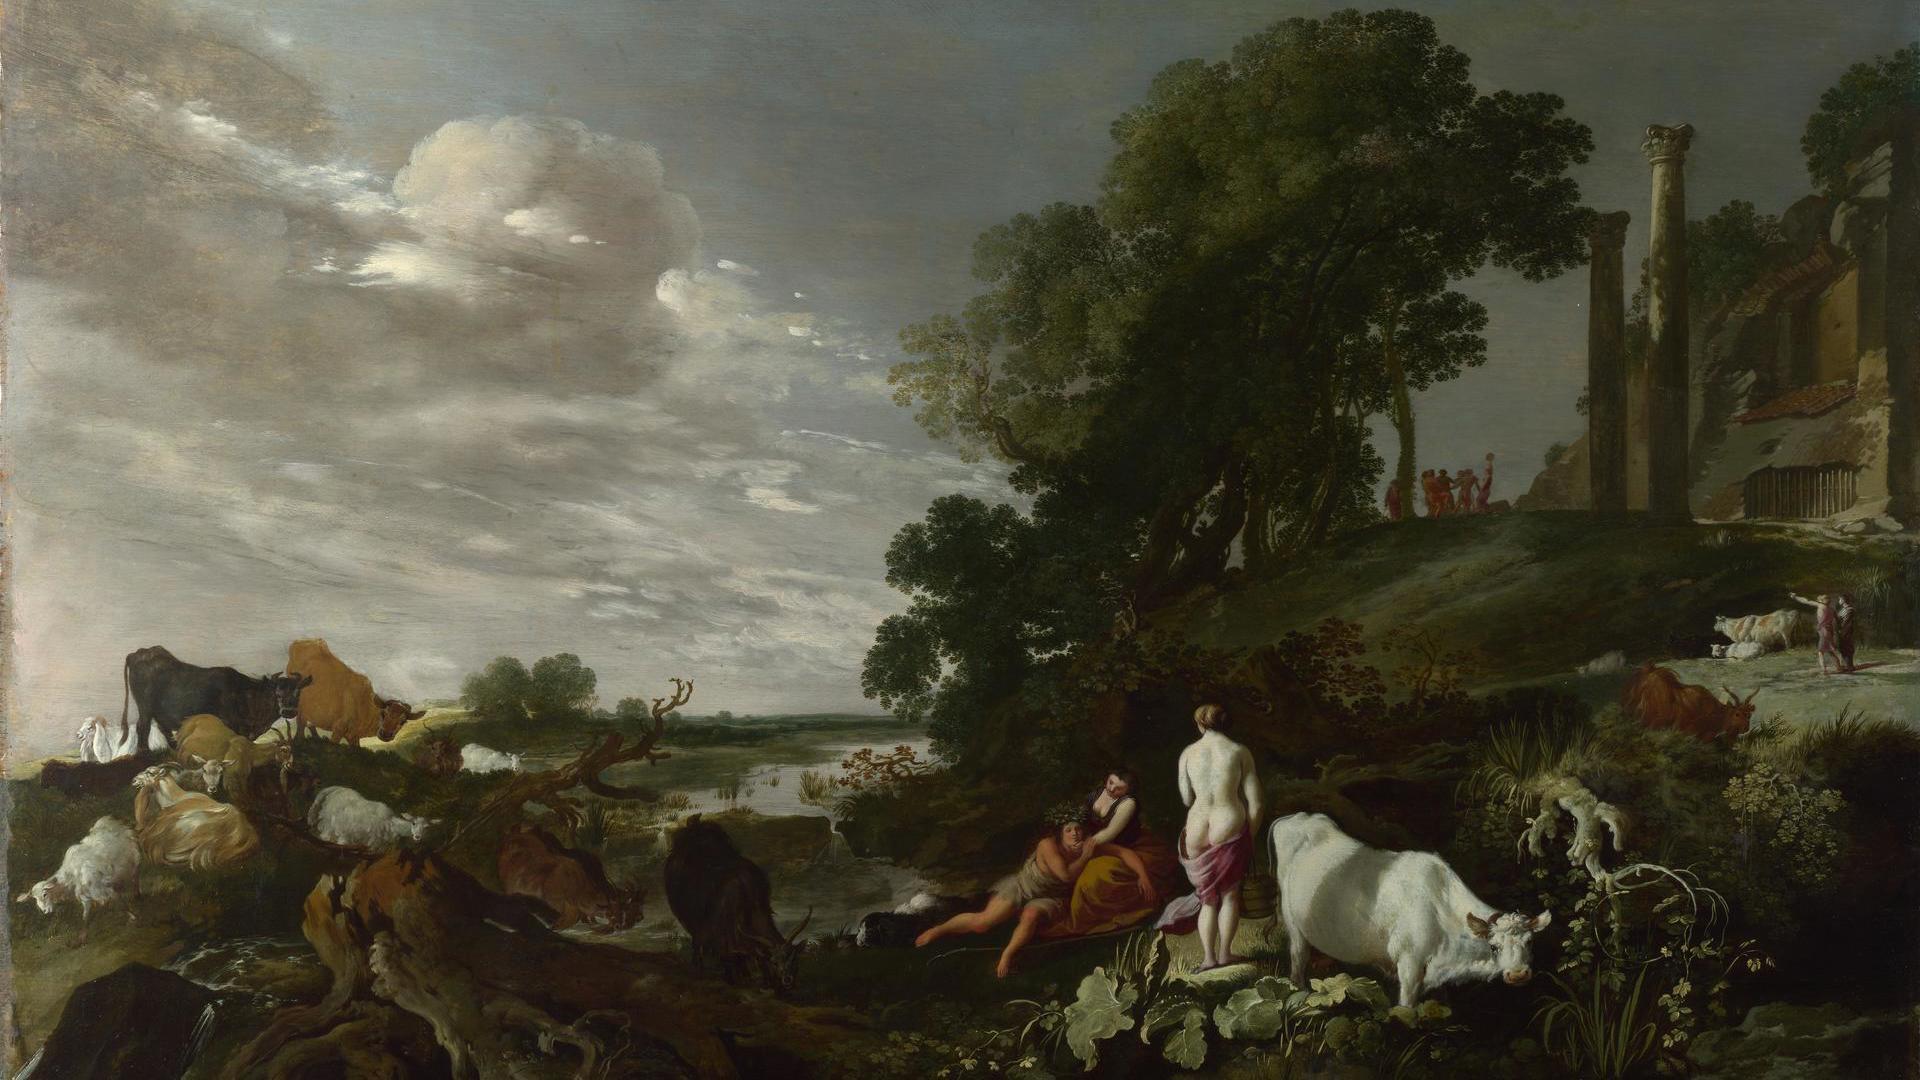 Landscape with Mythological Figures by Moses van Uyttenbroeck